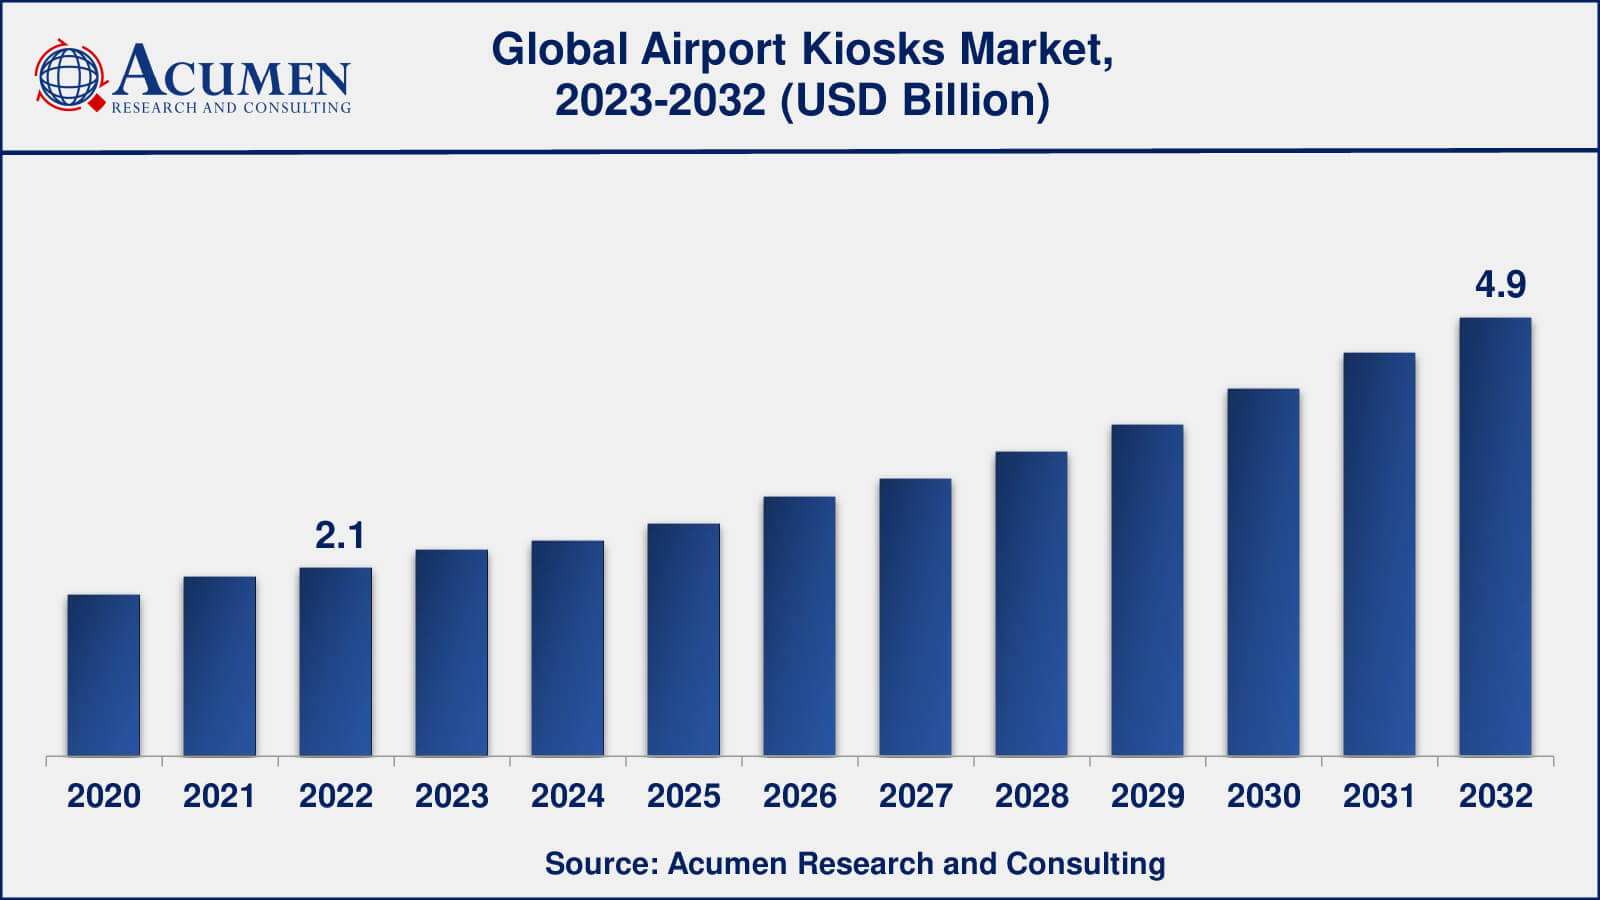 Global Airport Kiosks Market Dynamics